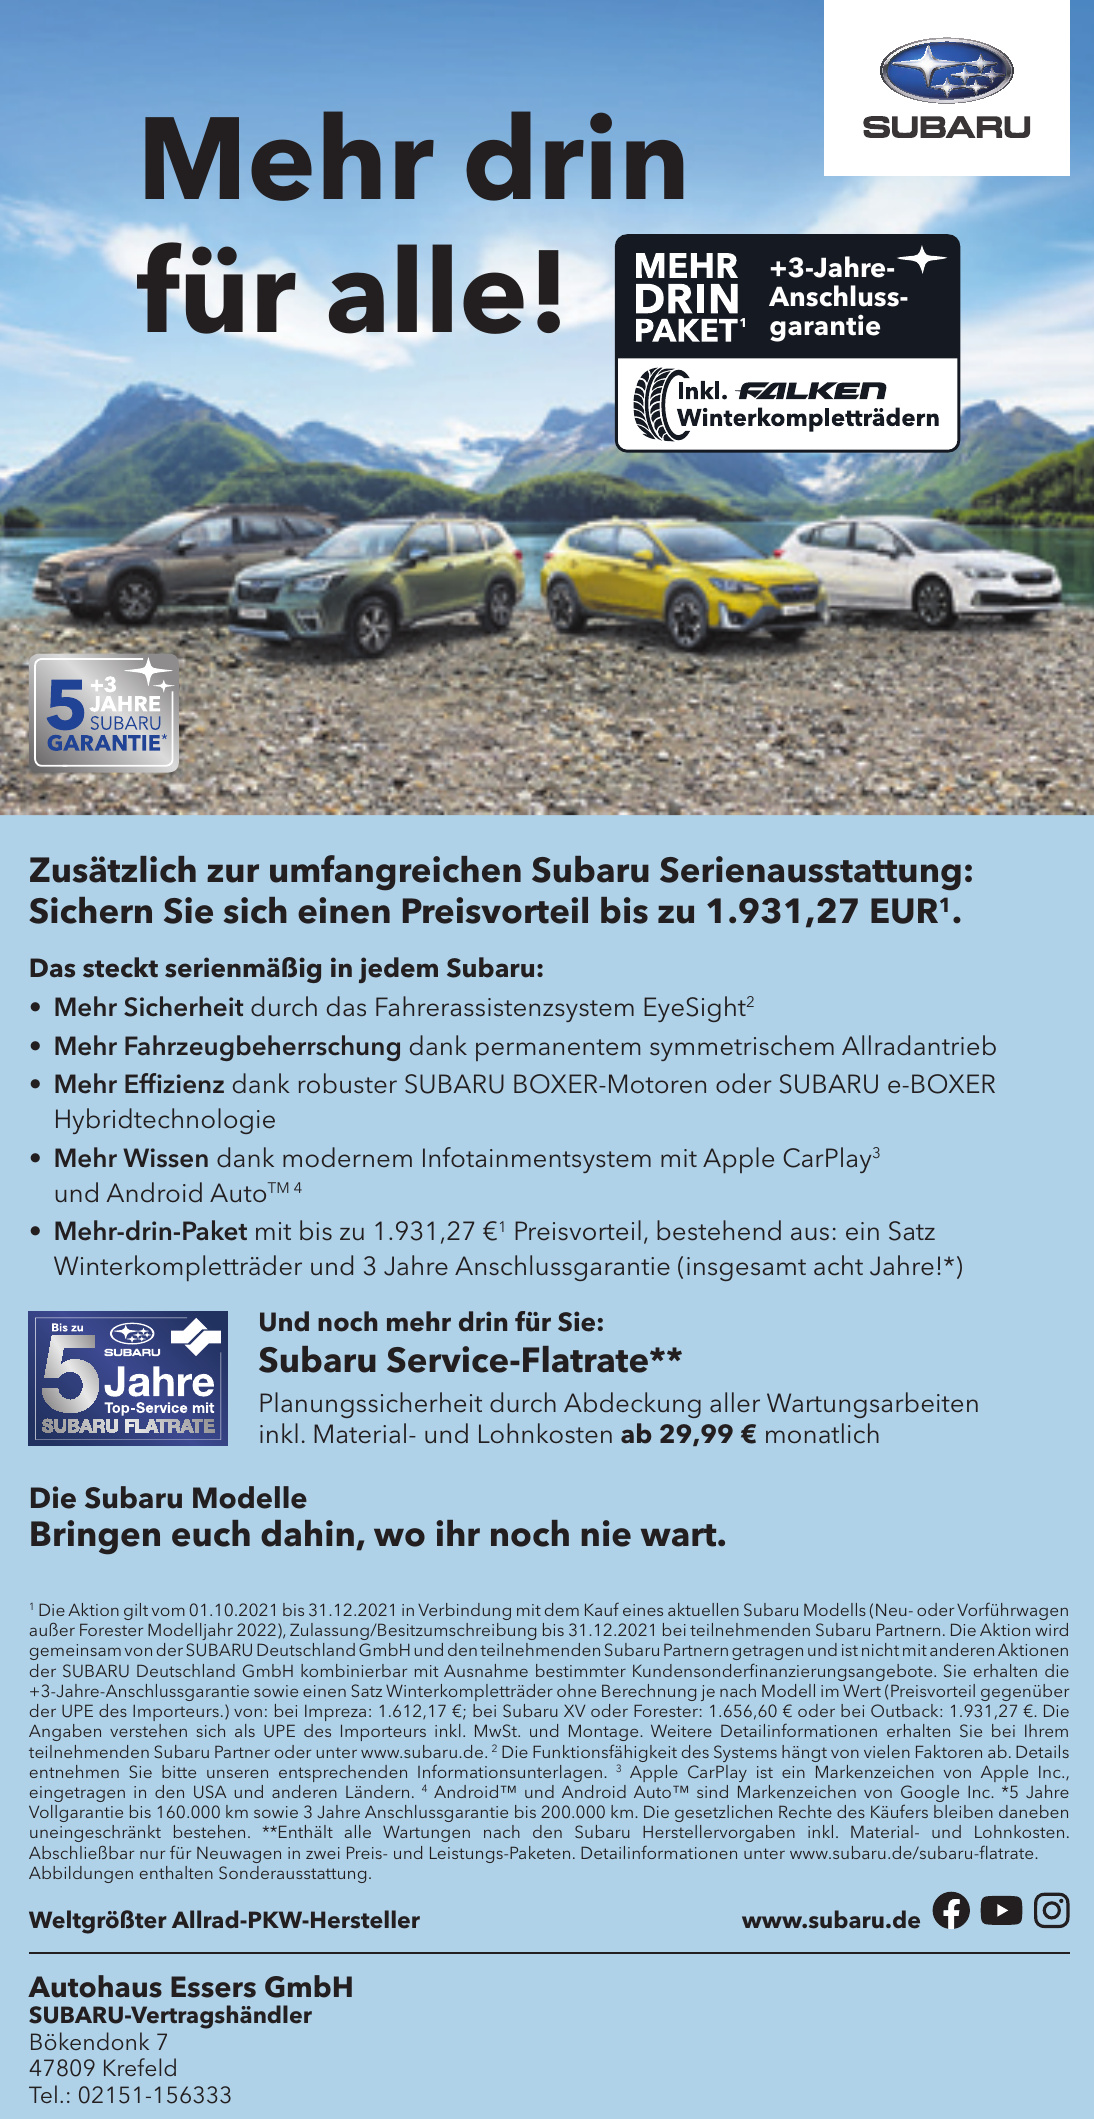 Autohaus Essers GmbH SUBARU-Vertragshändler